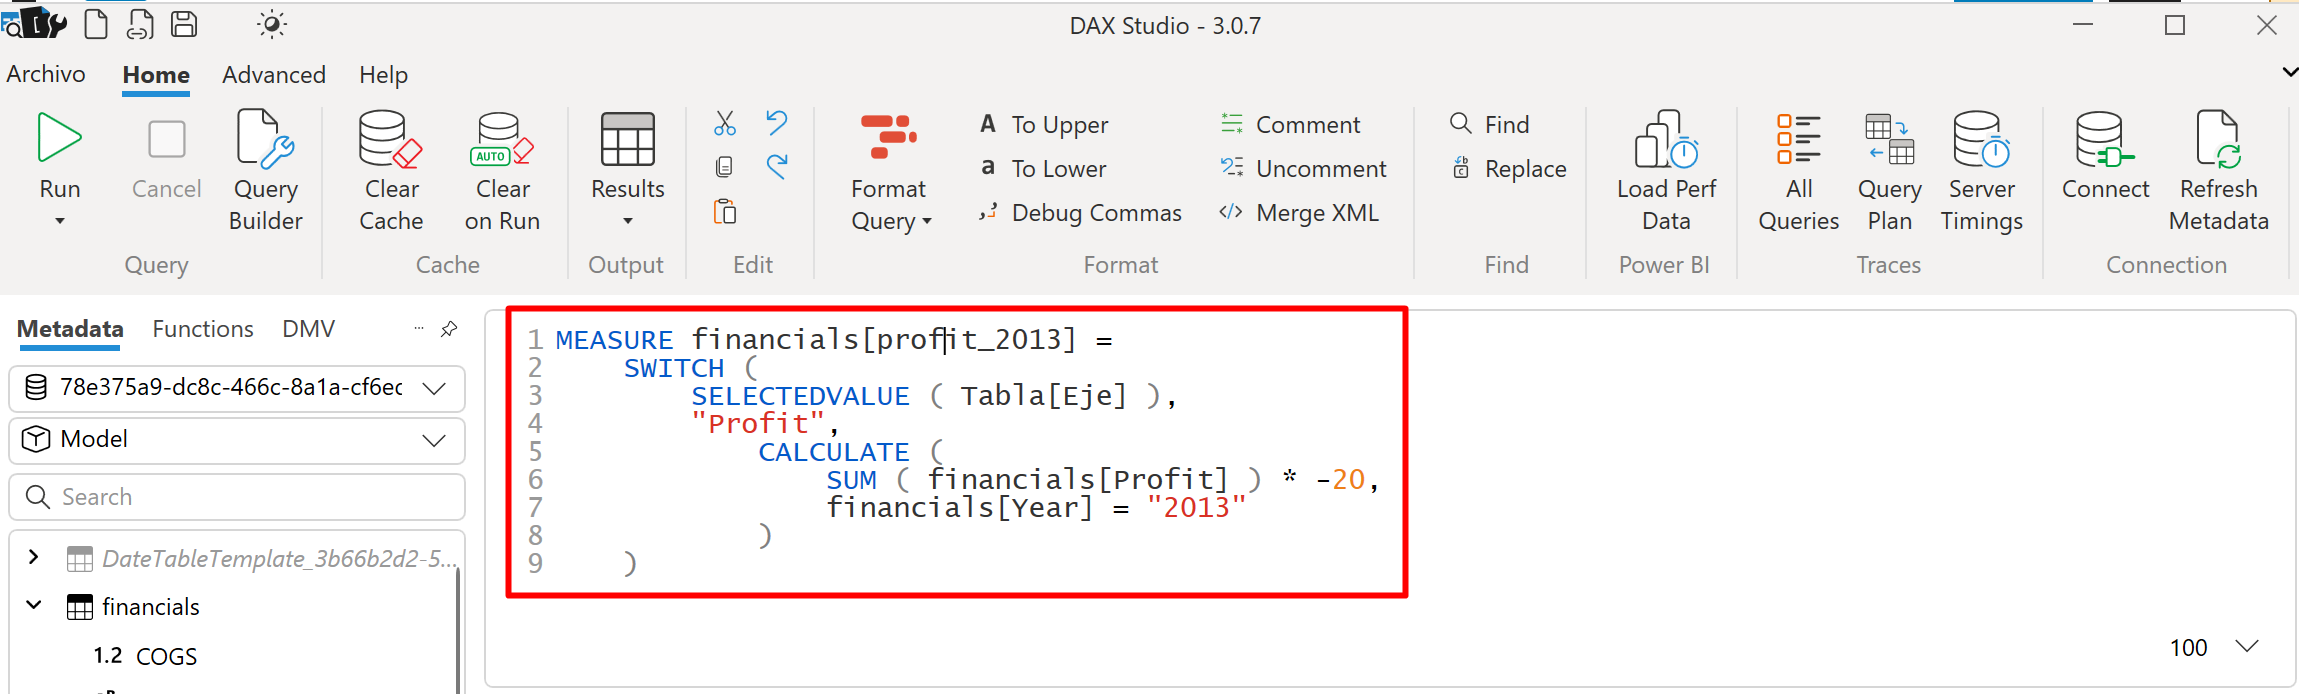 Formatear código DAX con DAX Studio